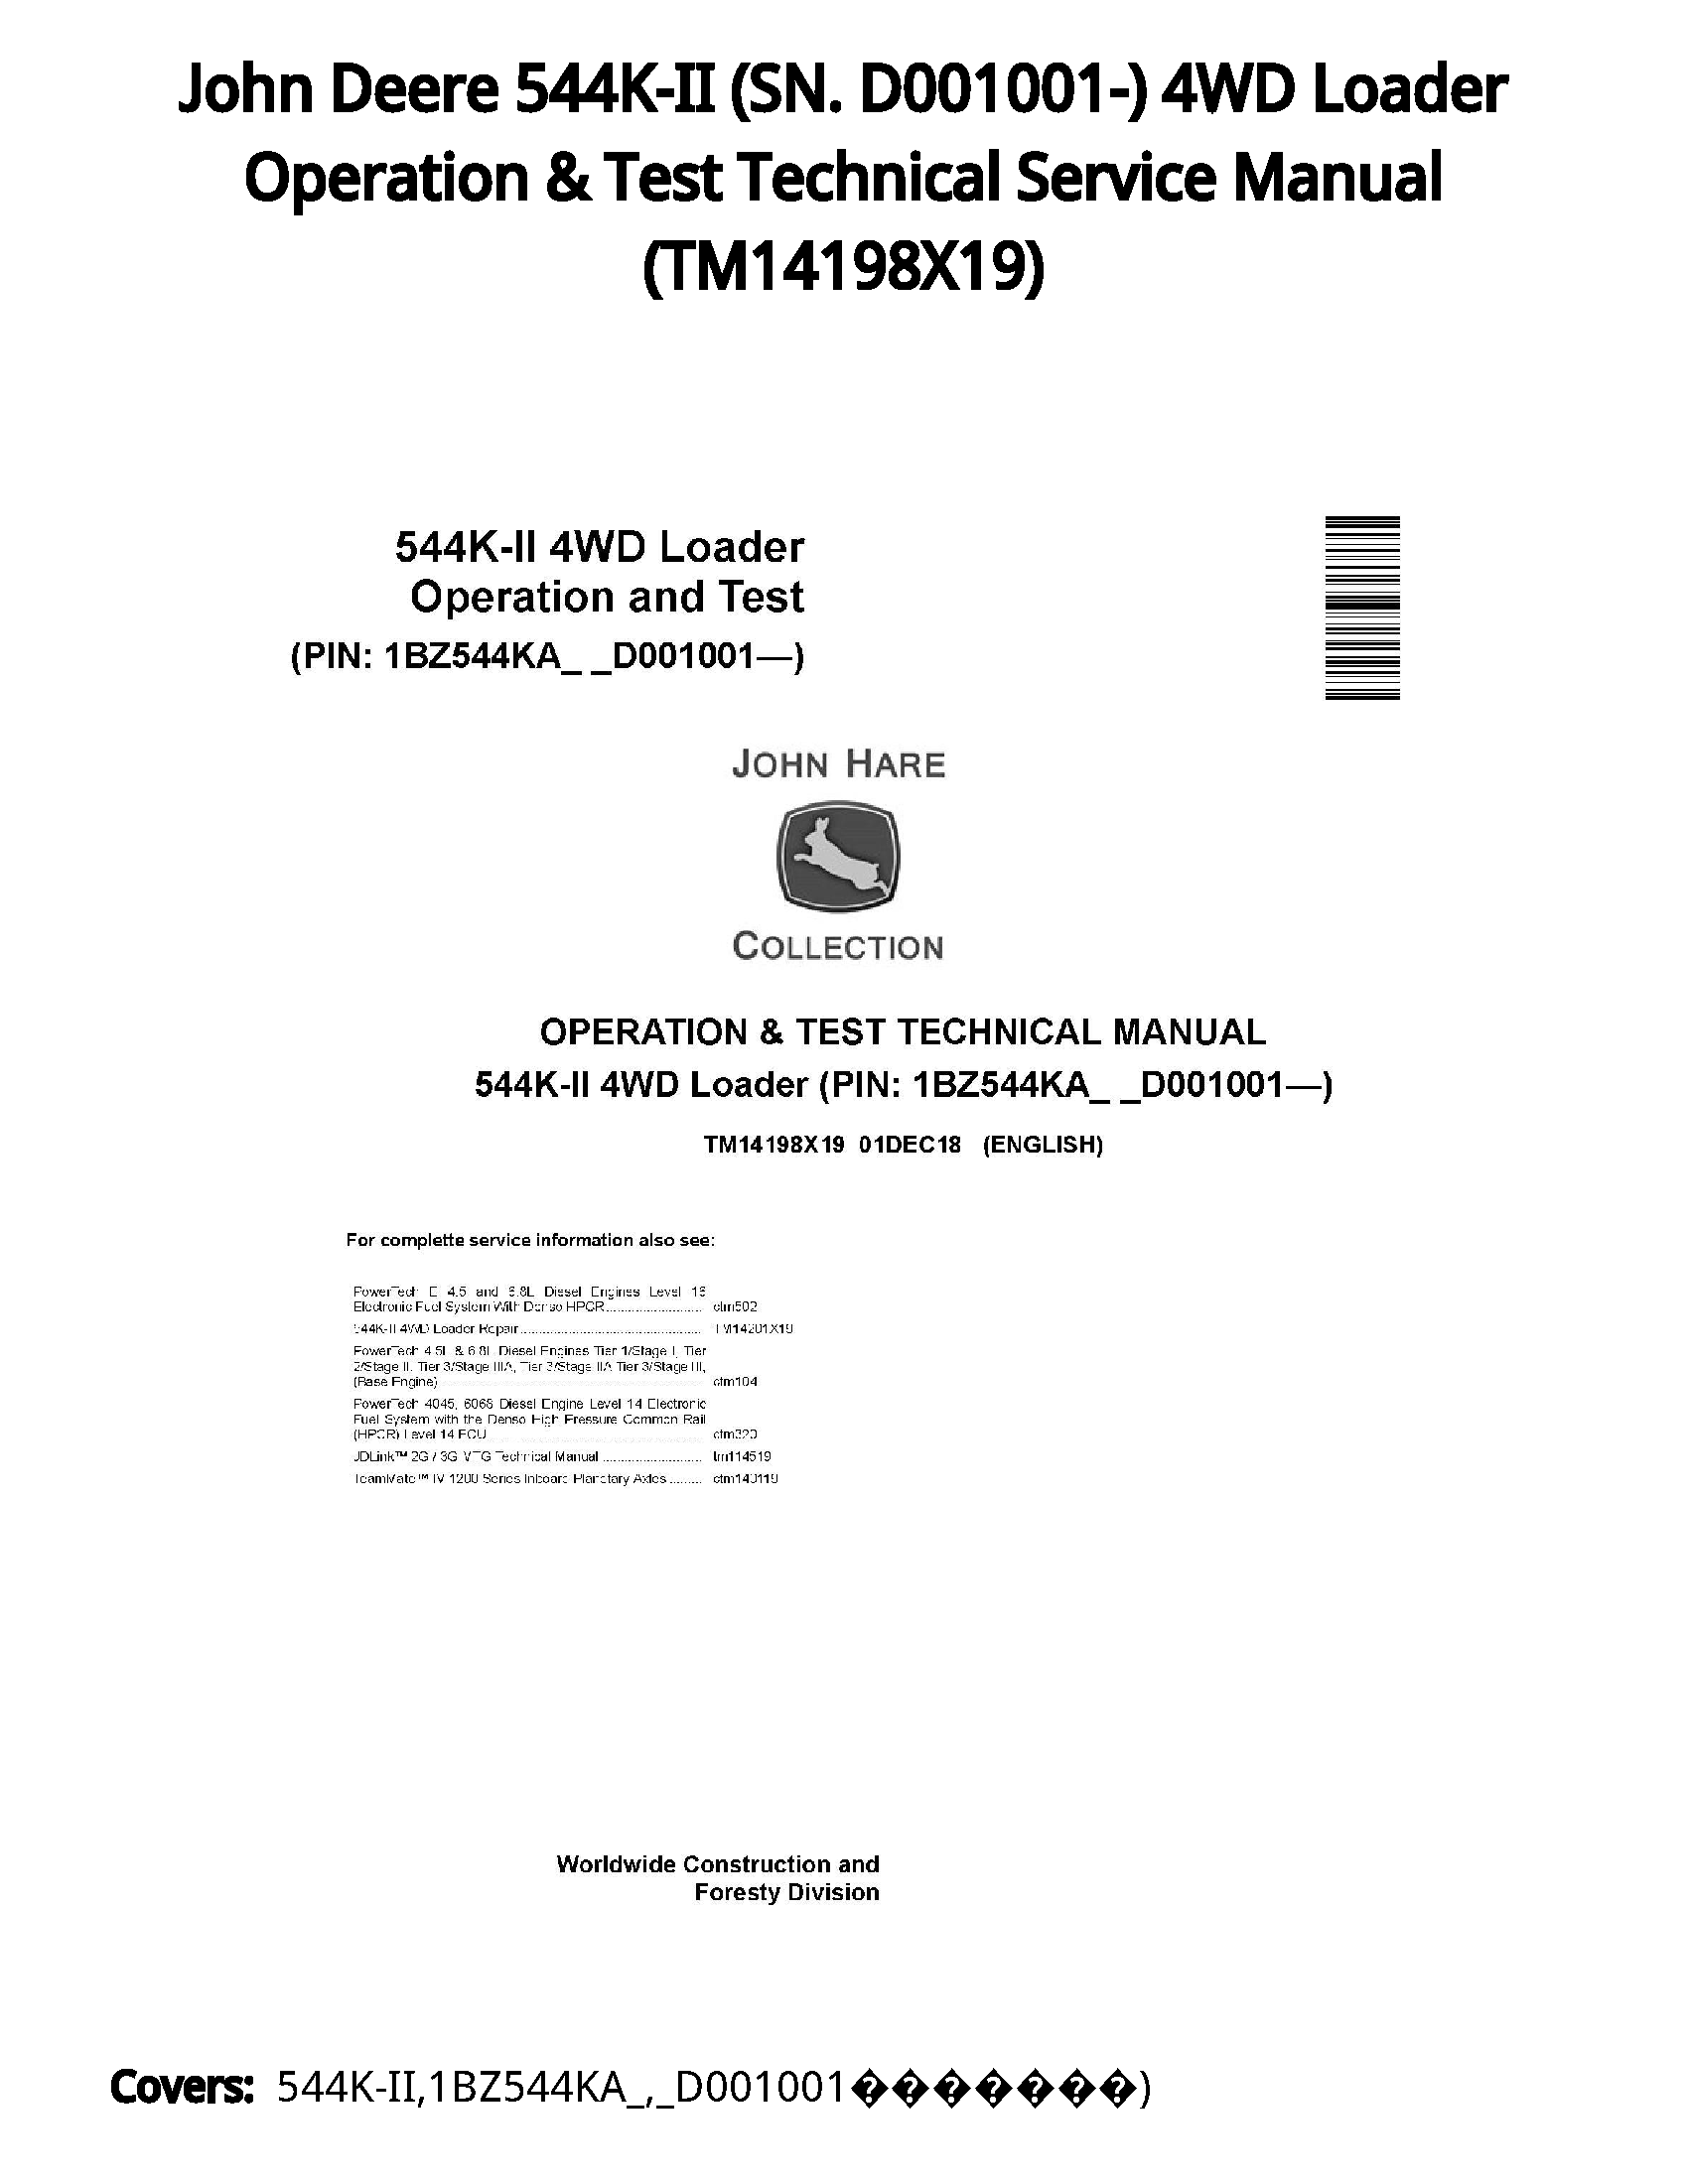 John Deere 544K-II (SN. D001001-) 4WD Loader Operation & Test Technical Service Manual - TM14198X19